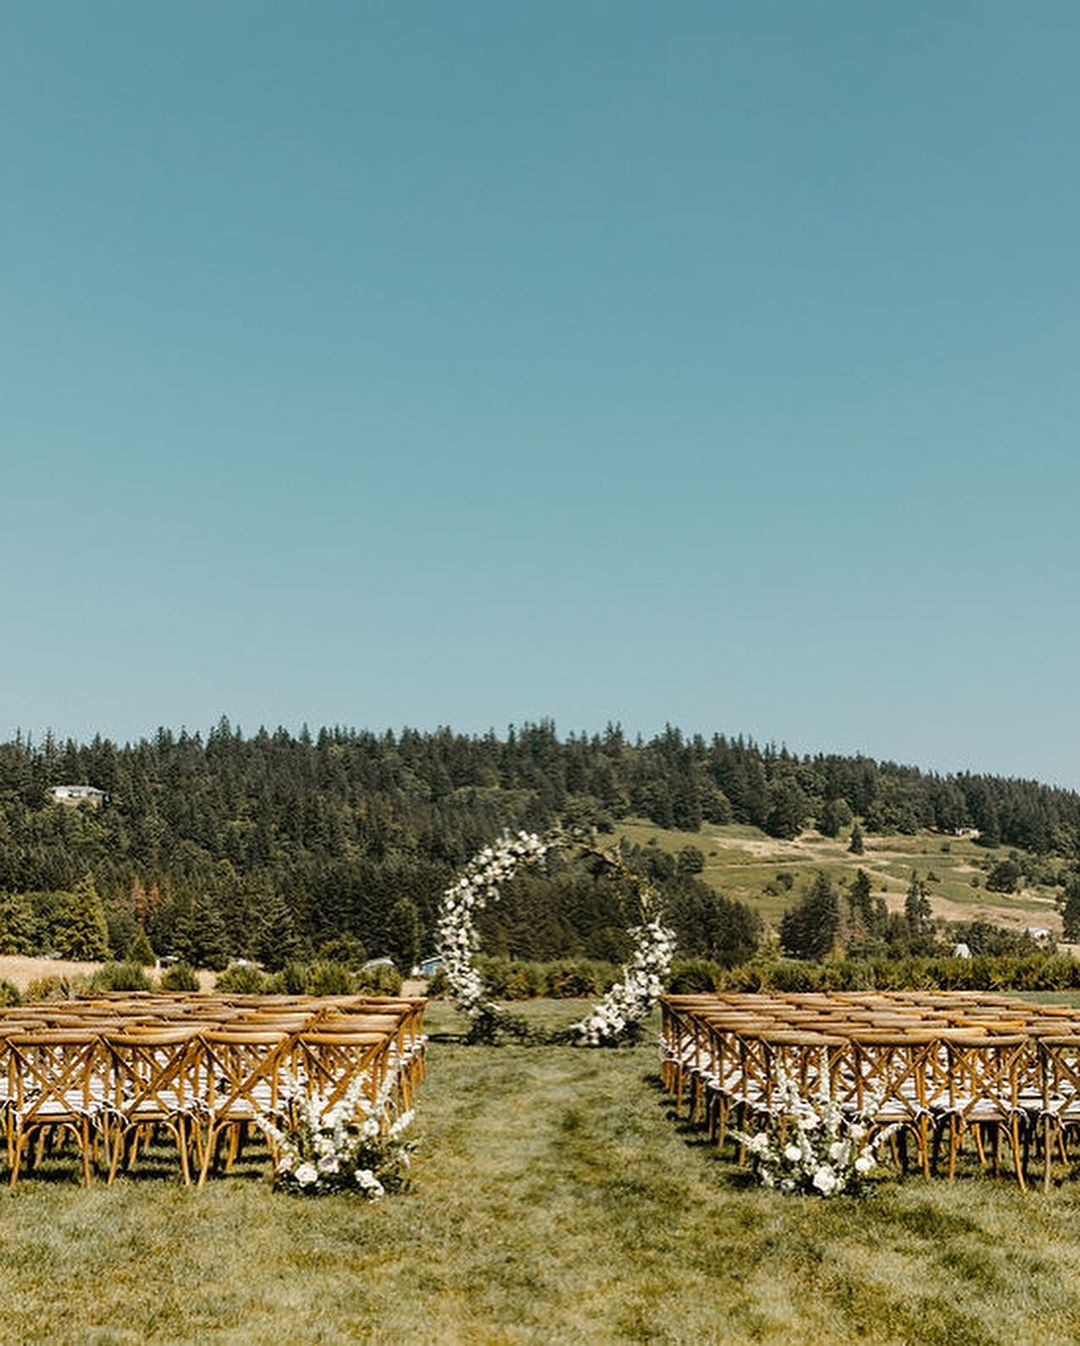 ceremony aisle at european-inspired wedding venue 